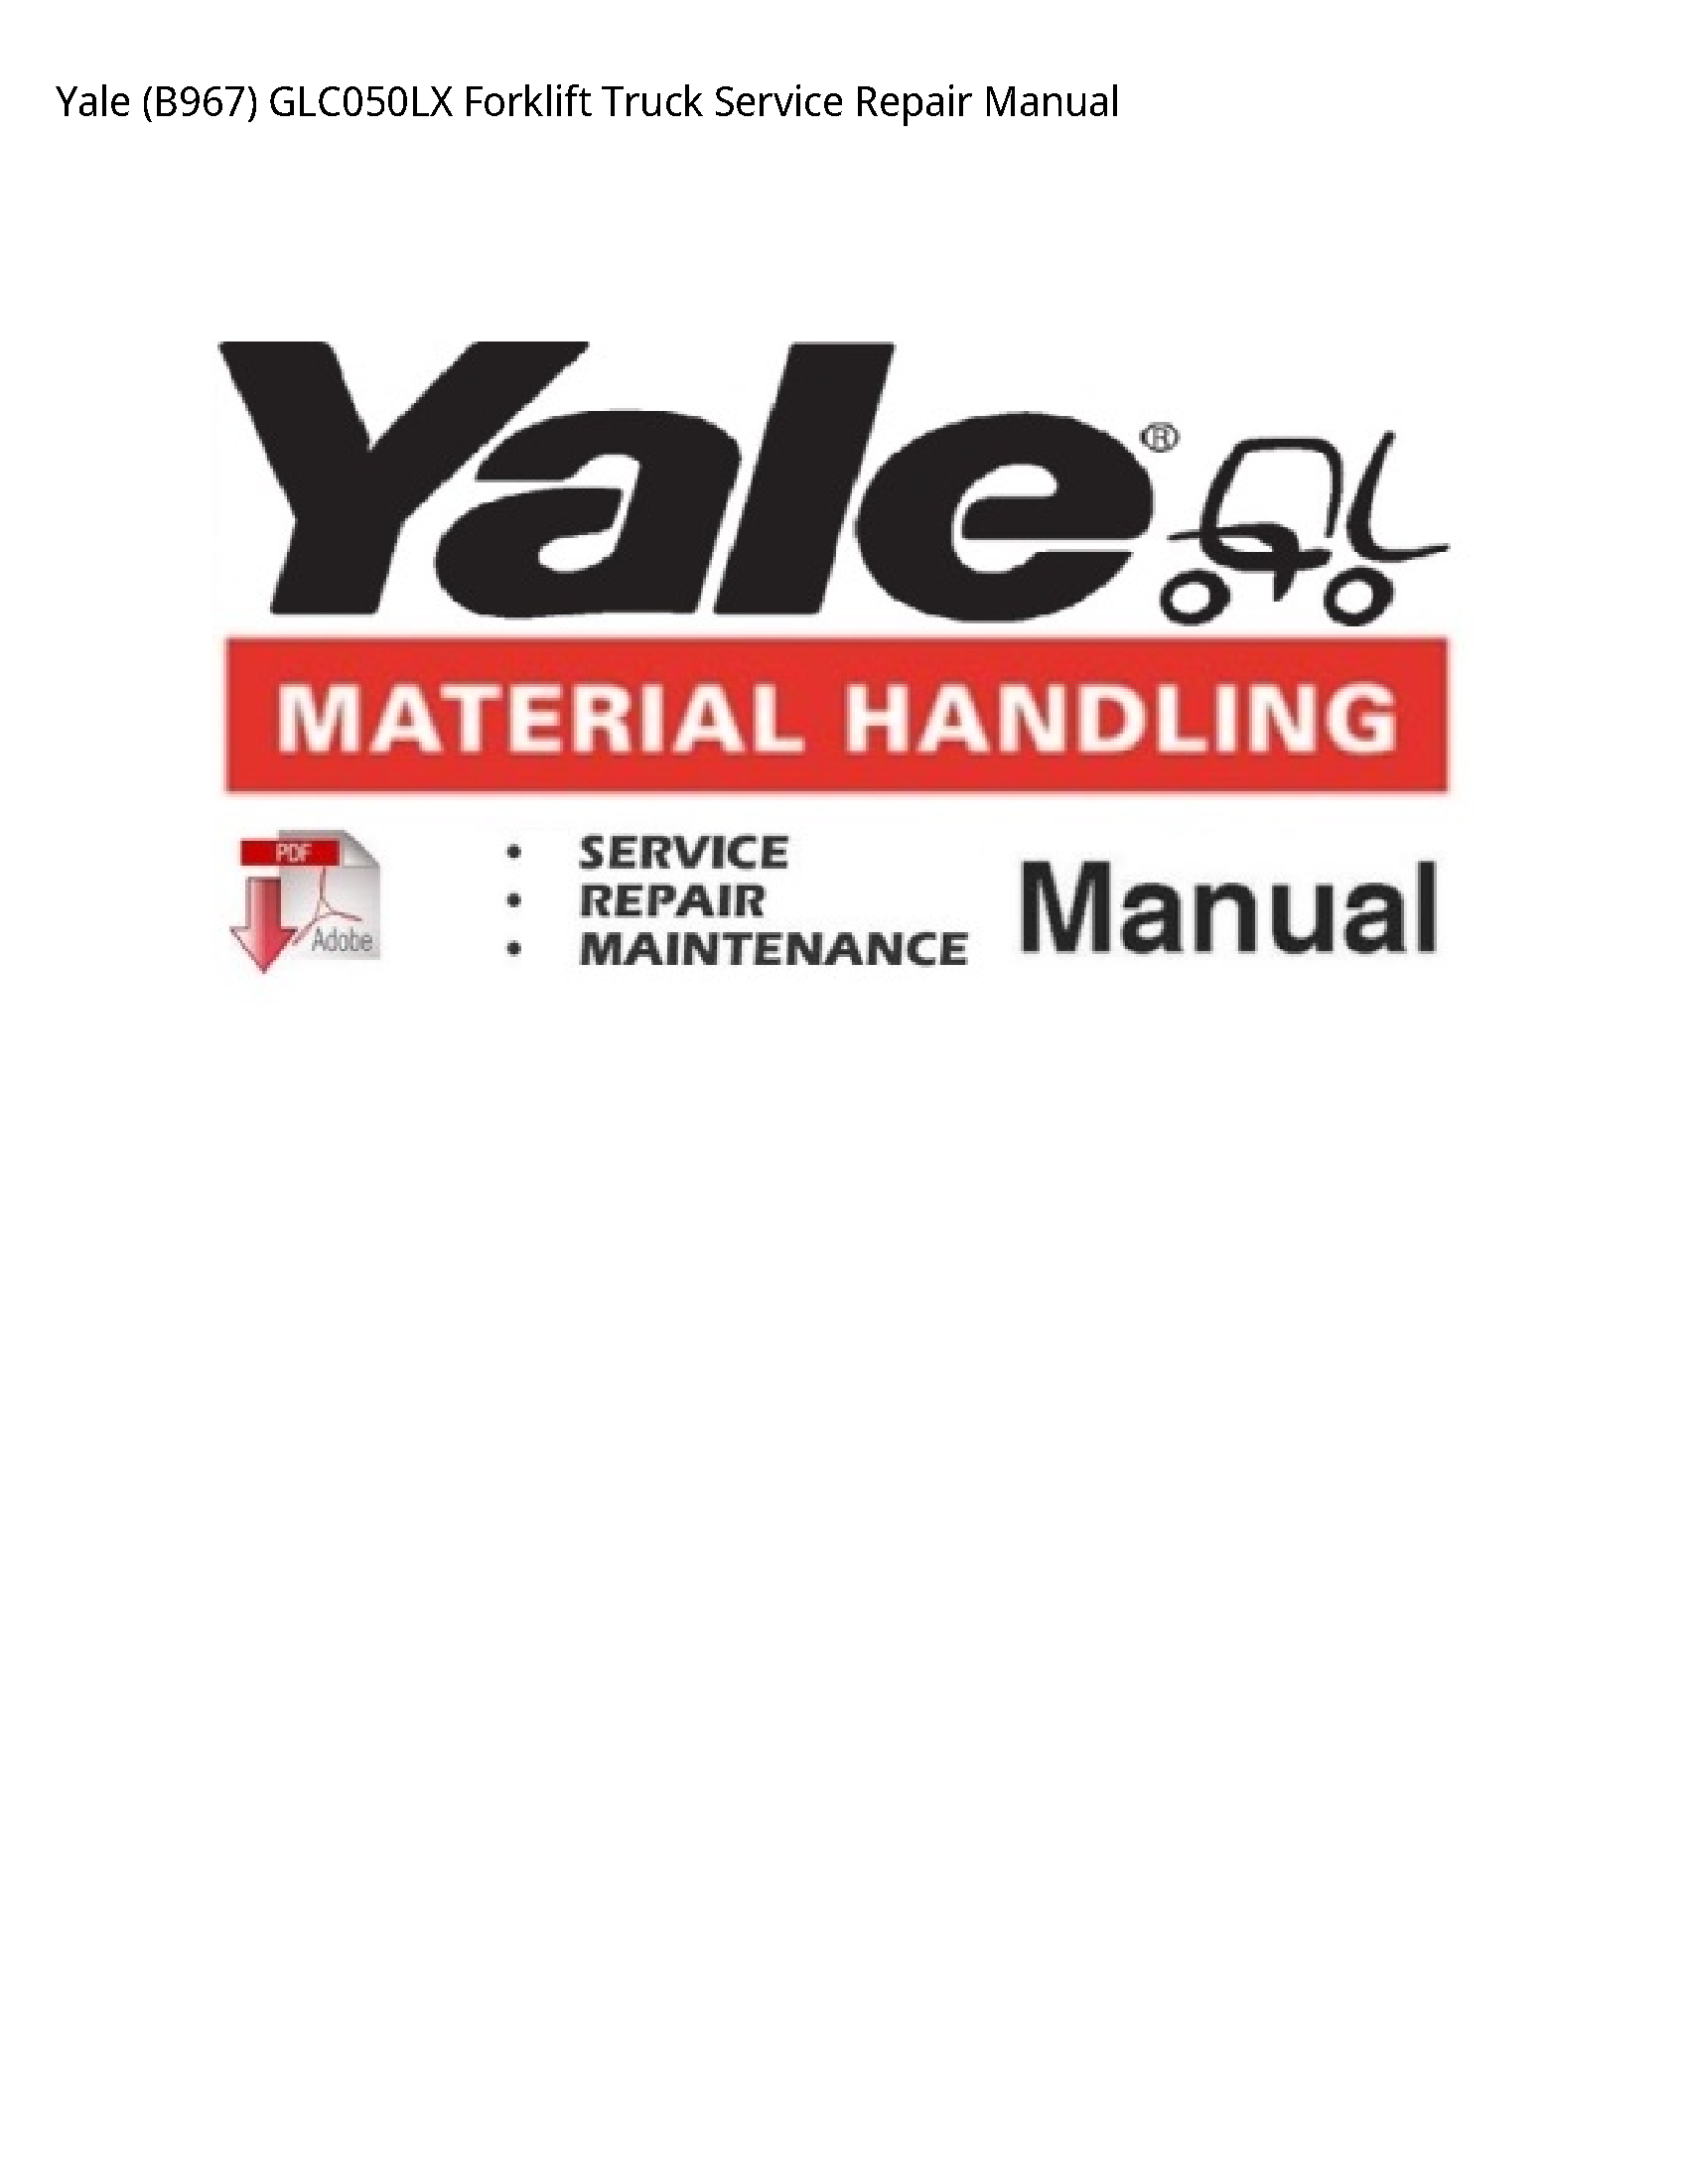 Yale (B967) Forklift Truck manual